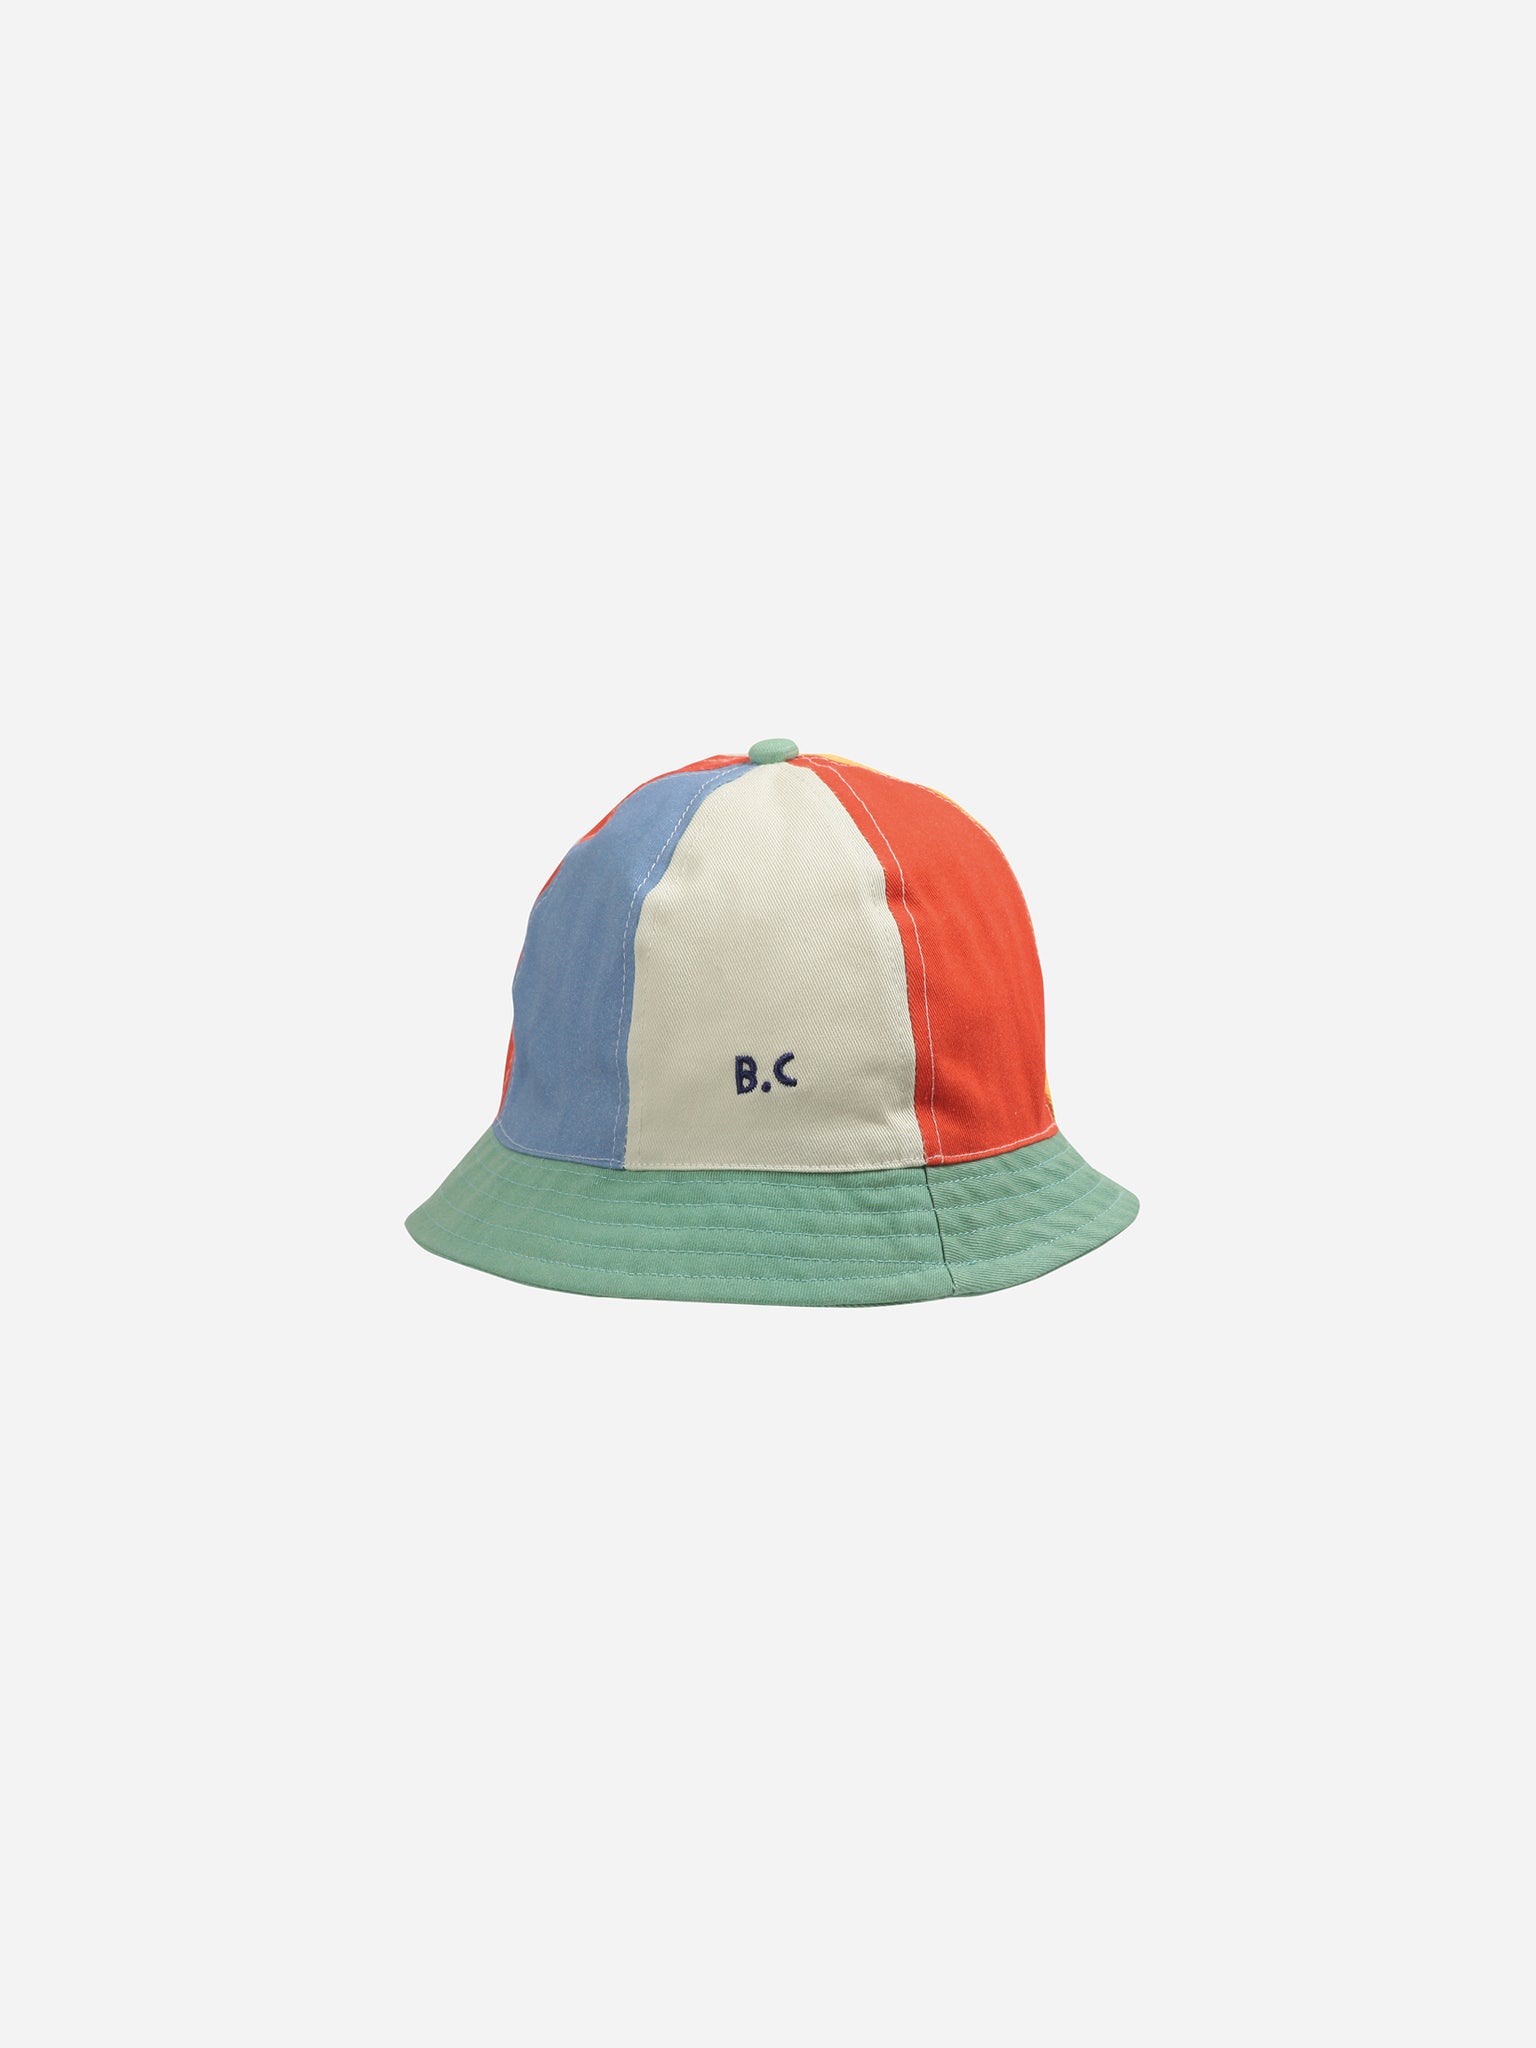 Color block B.C hat